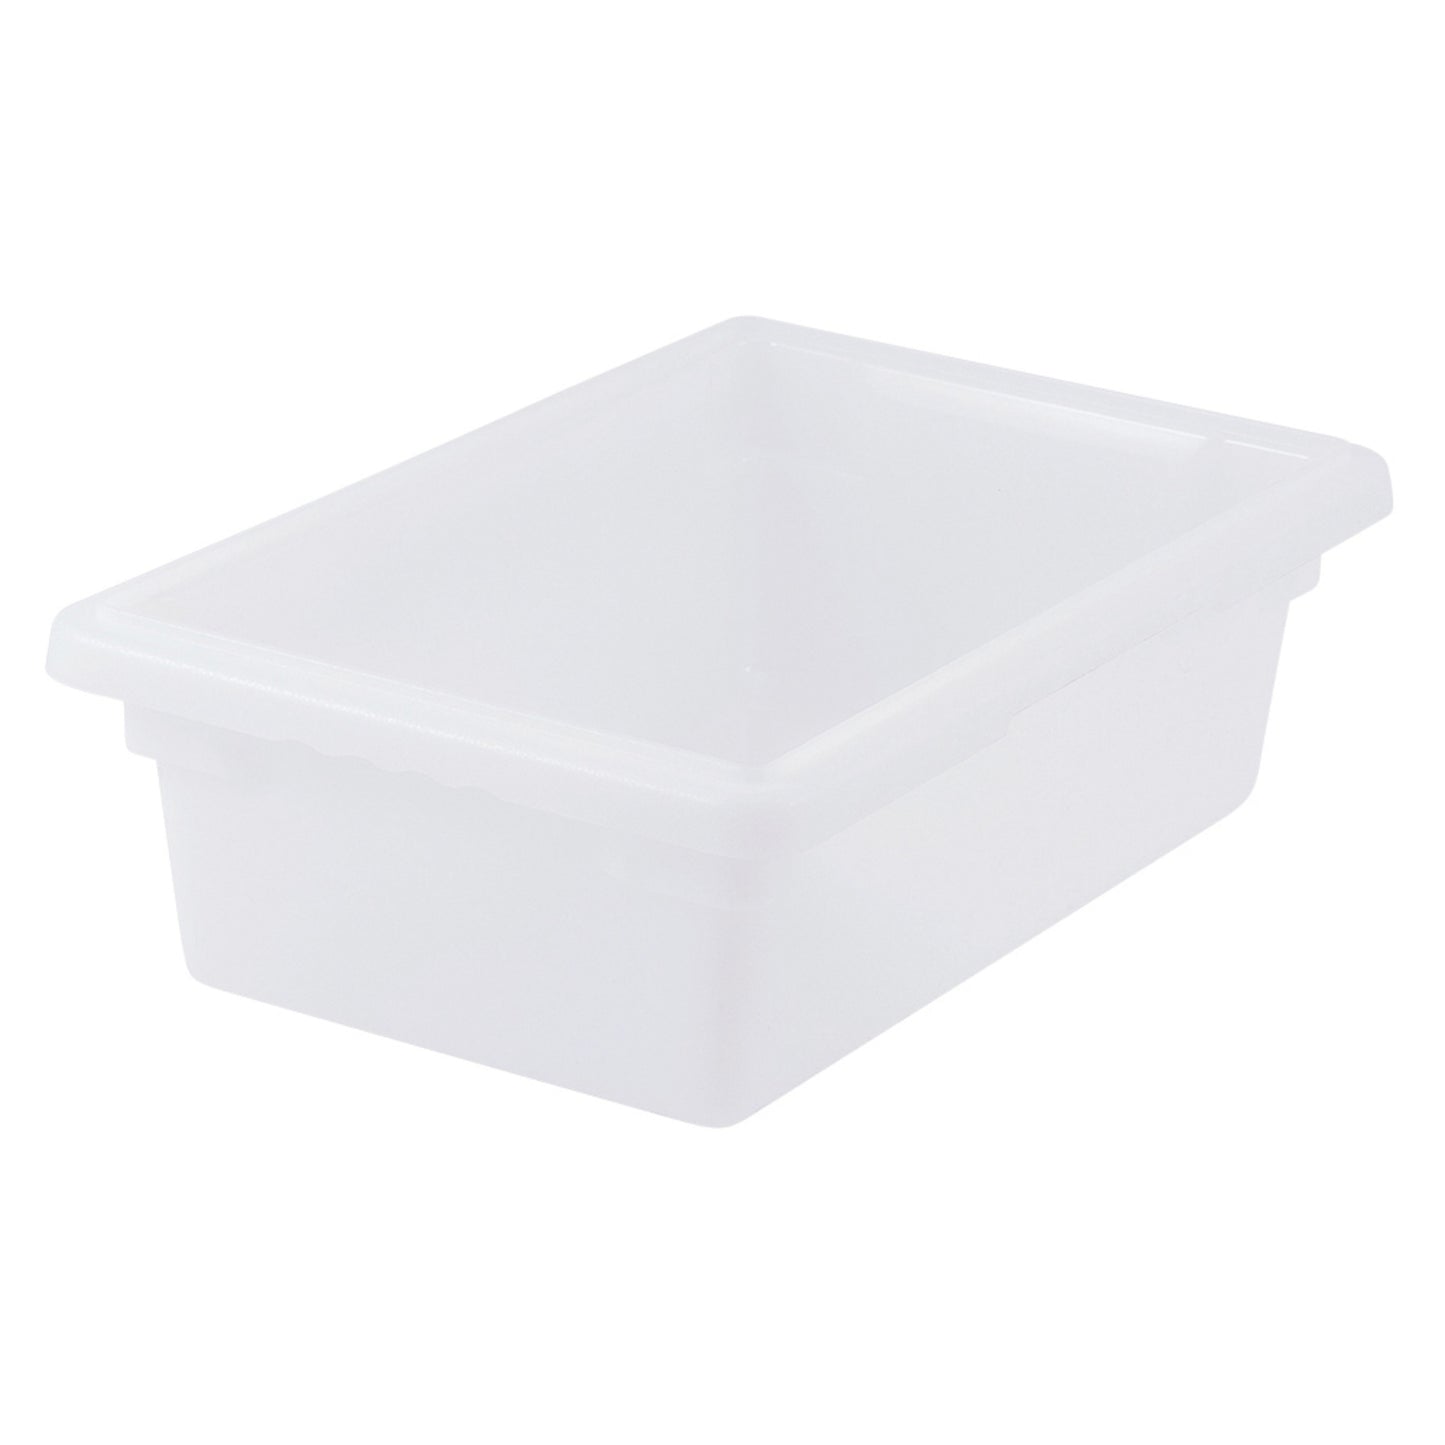 PFHW-6 - Food Storage Box, White Polypropylene - Half, 6"